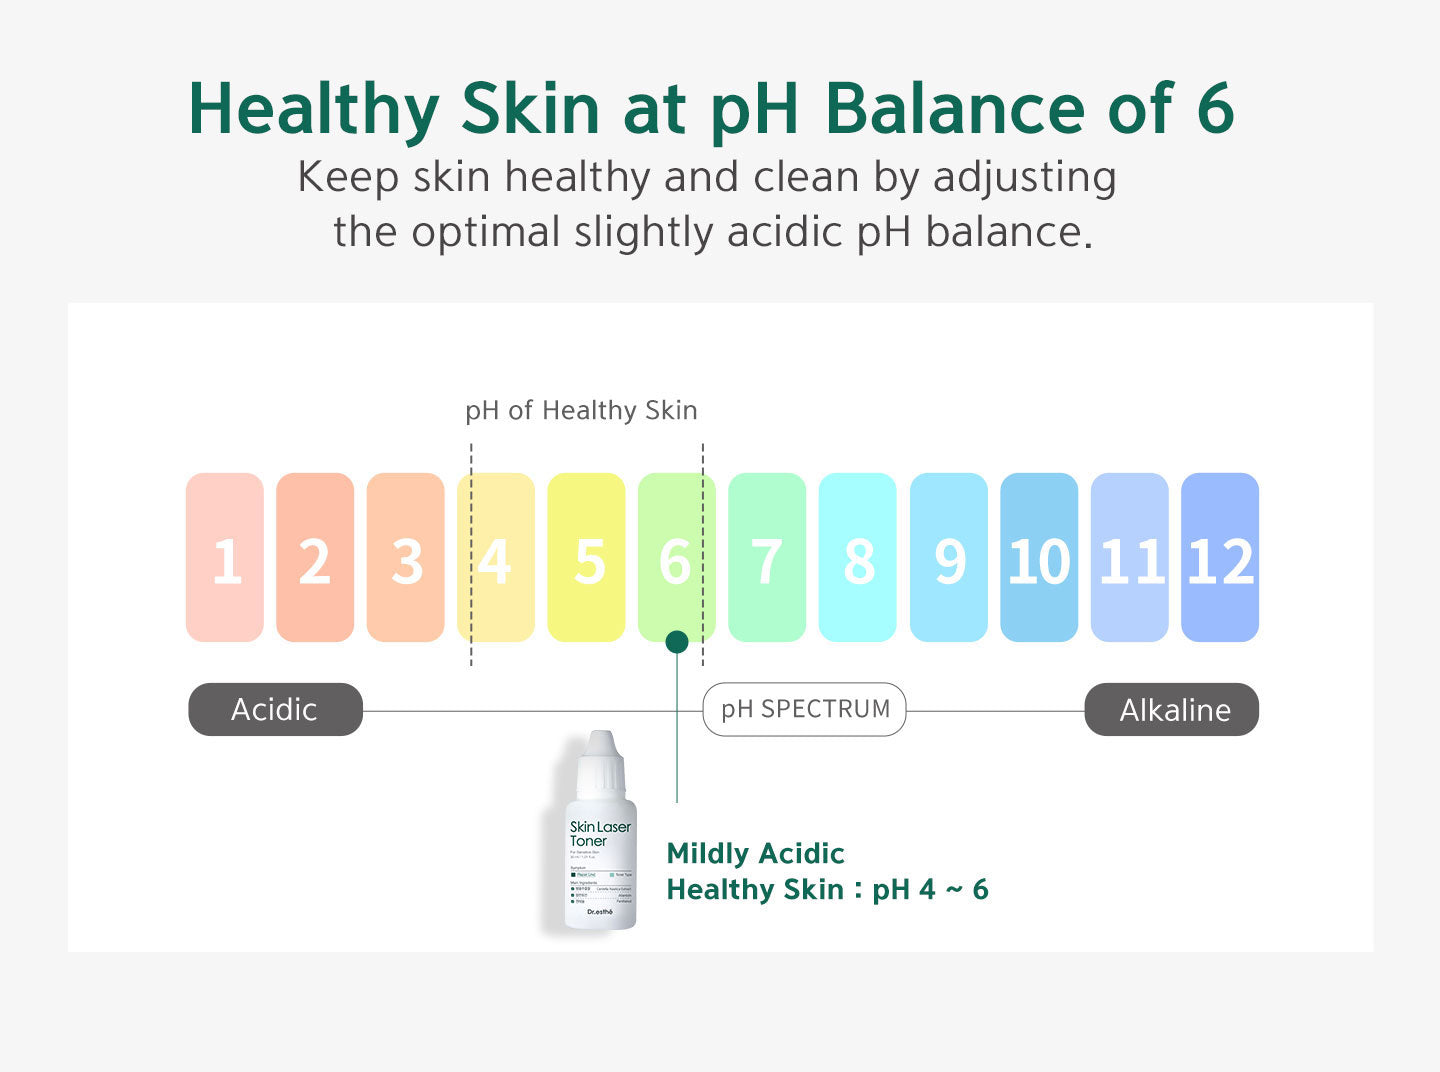 Healthy skin at pH balance of 6. Keep skin healthy and clean by adjusting the optimal slightly acidic pH balance. 